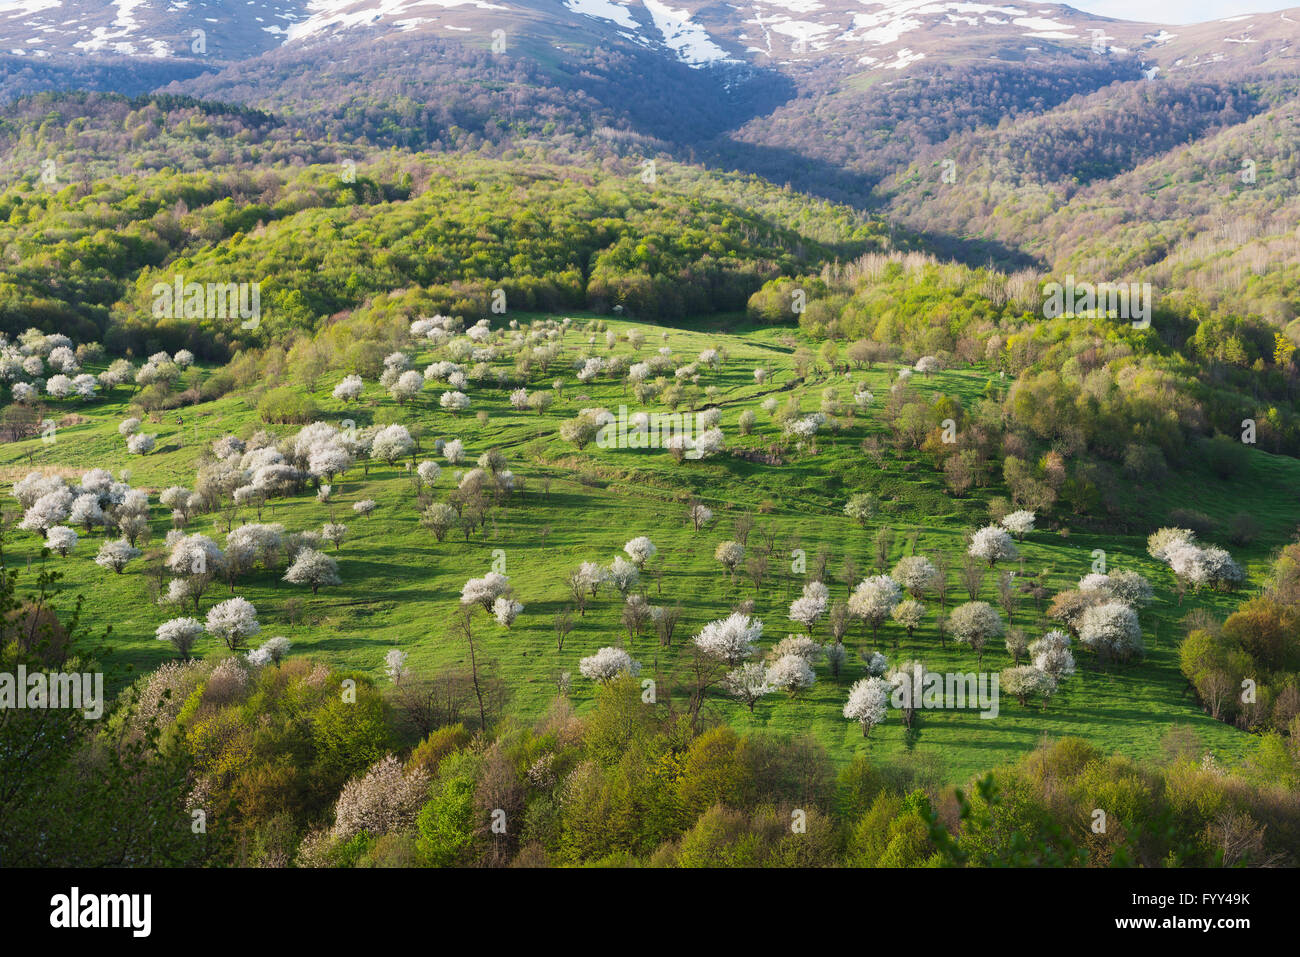 Eurasia, Caucasus region, Armenia, Lori province, rural scenery, mountain cherry blossom Stock Photo